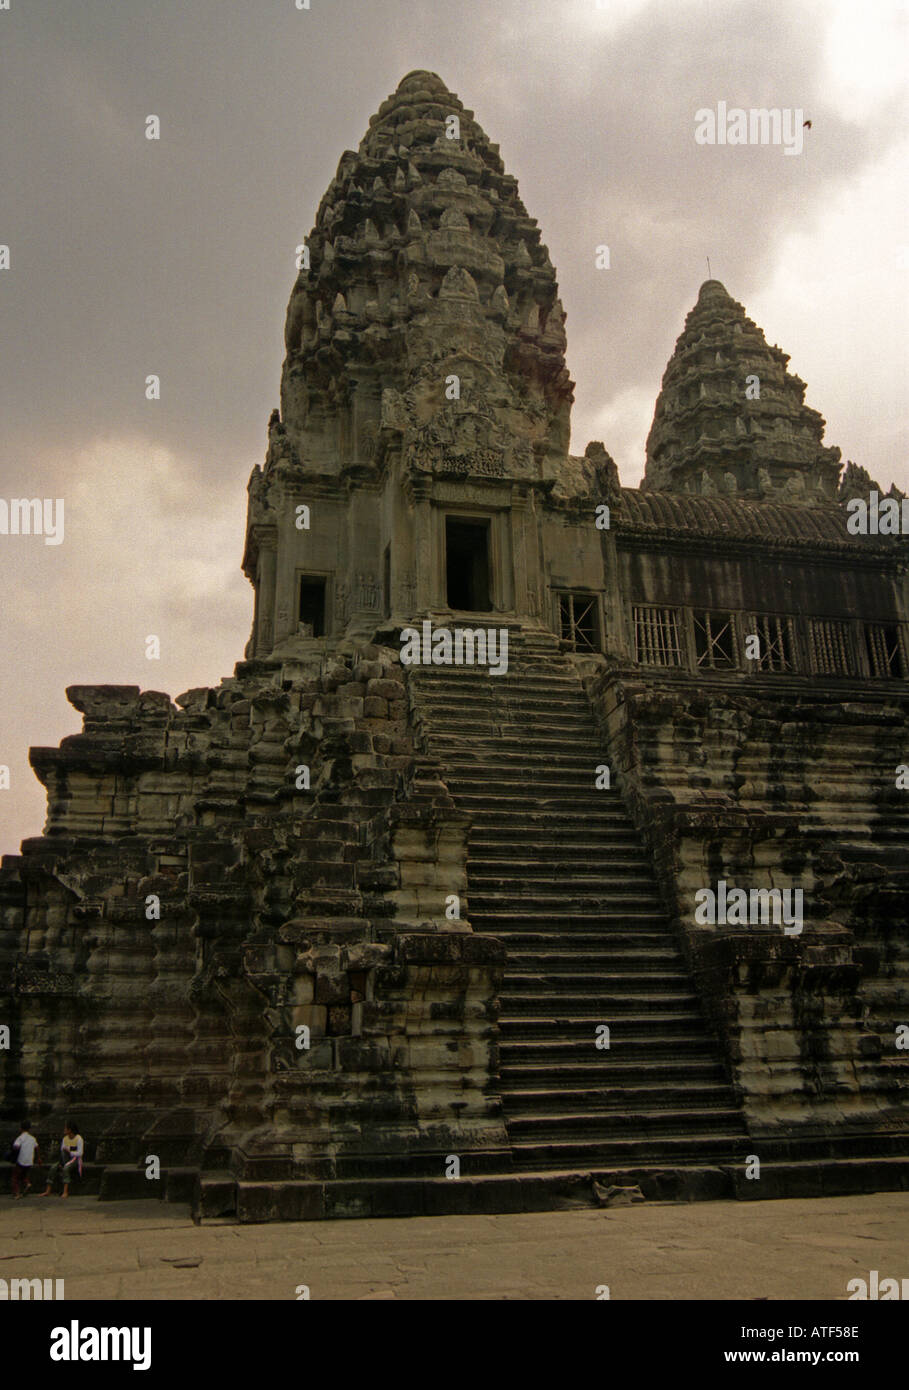 Big huge imposant massif impressionnant Hindu Temple Pyramide raide pierre & gens assis bas Angkor Vat Cambodge Asie du sud-est Banque D'Images